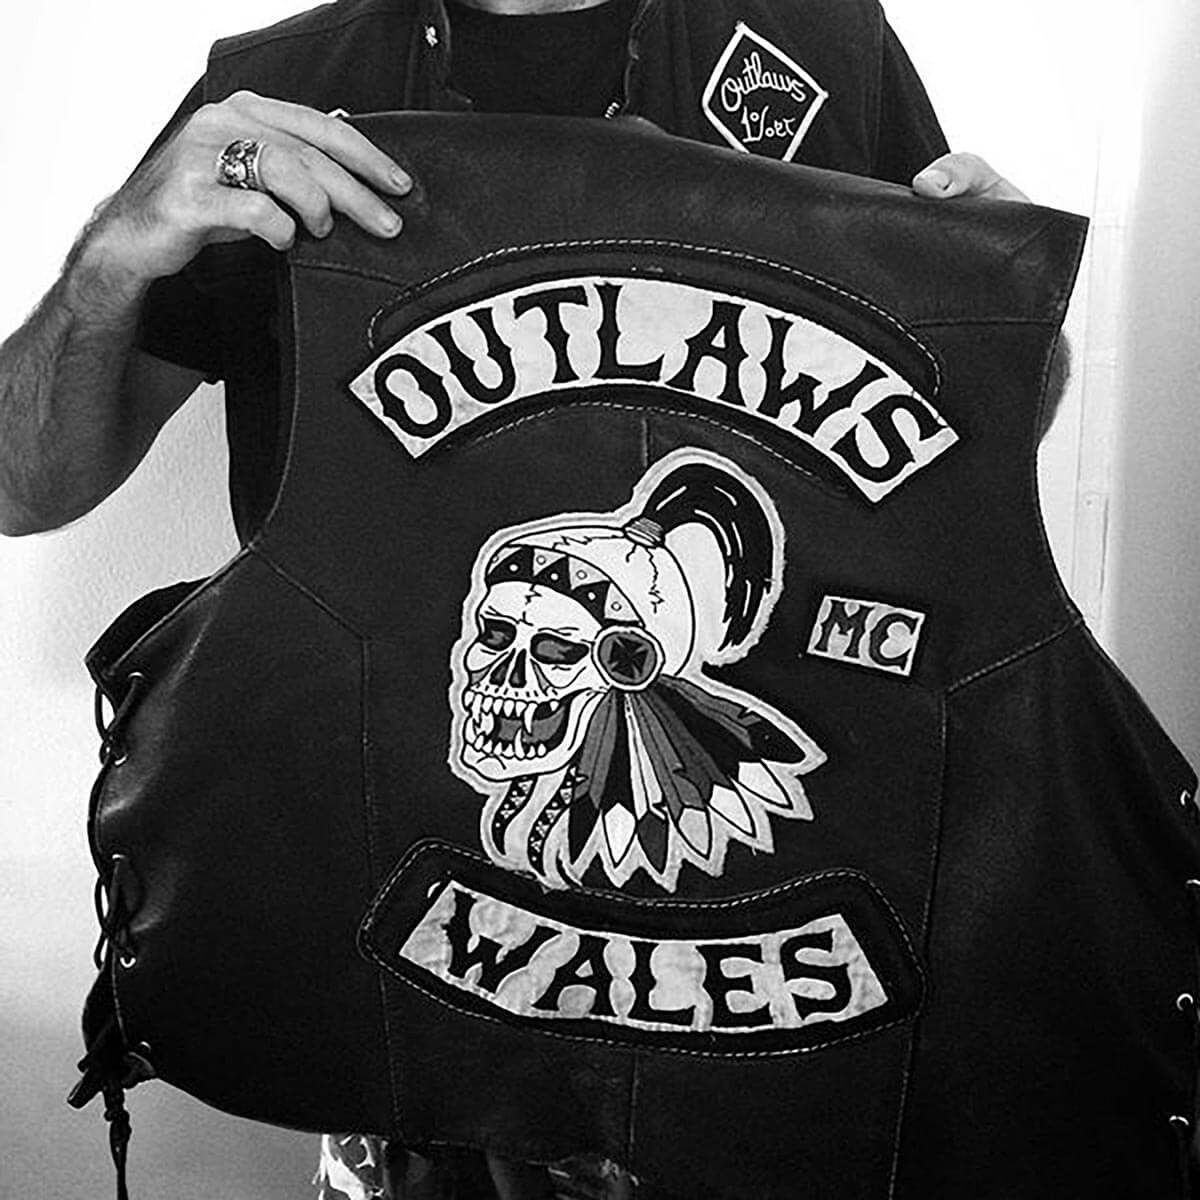 Easy Rider Outlaws News Article | Atollon - a design company